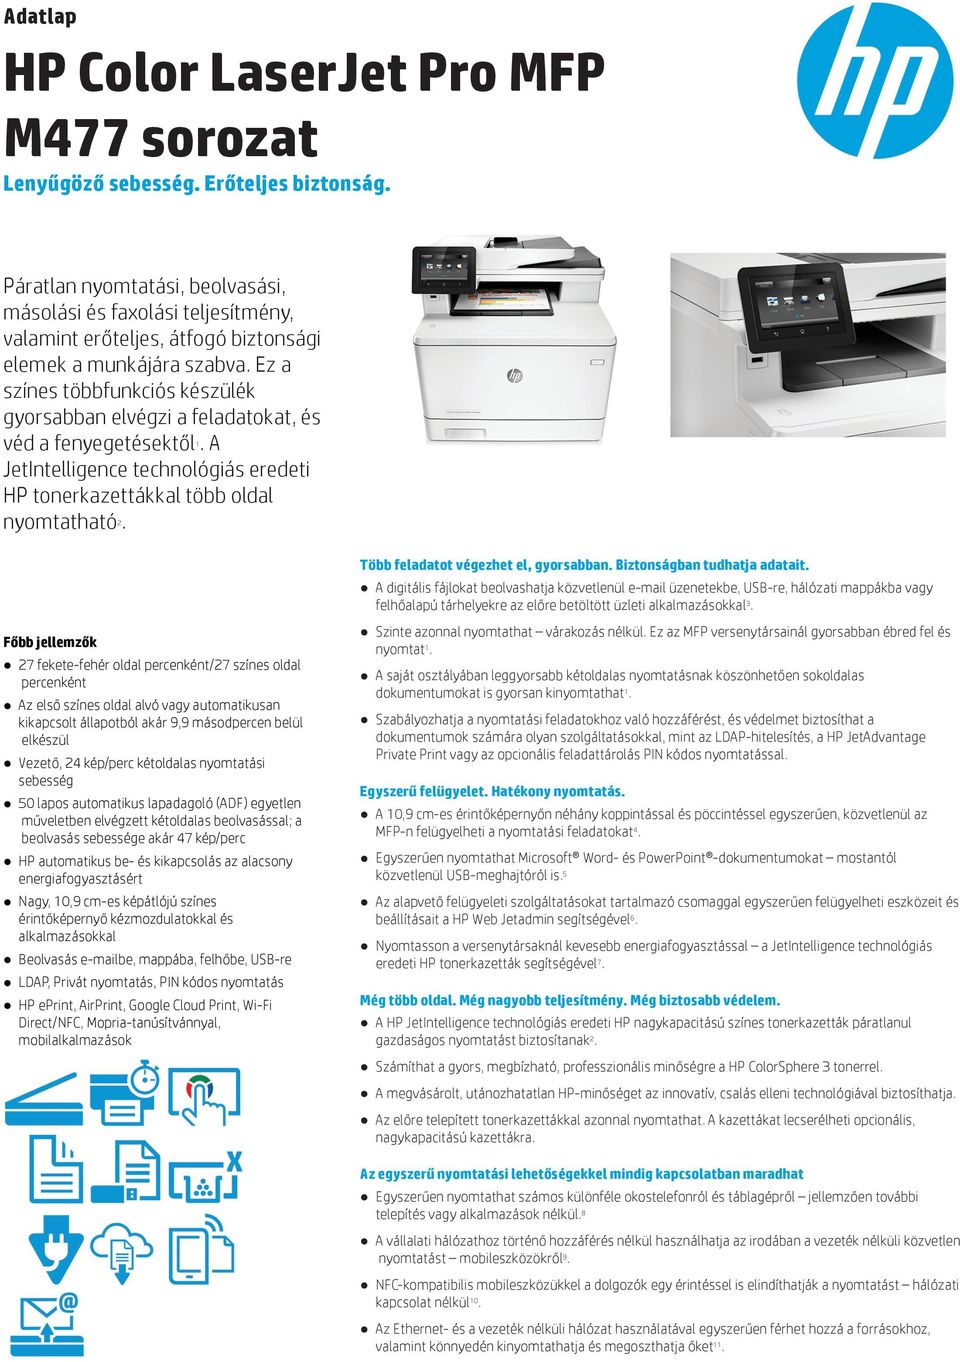 HP Color LaserJet Pro MFP M477 sorozat - PDF Free Download